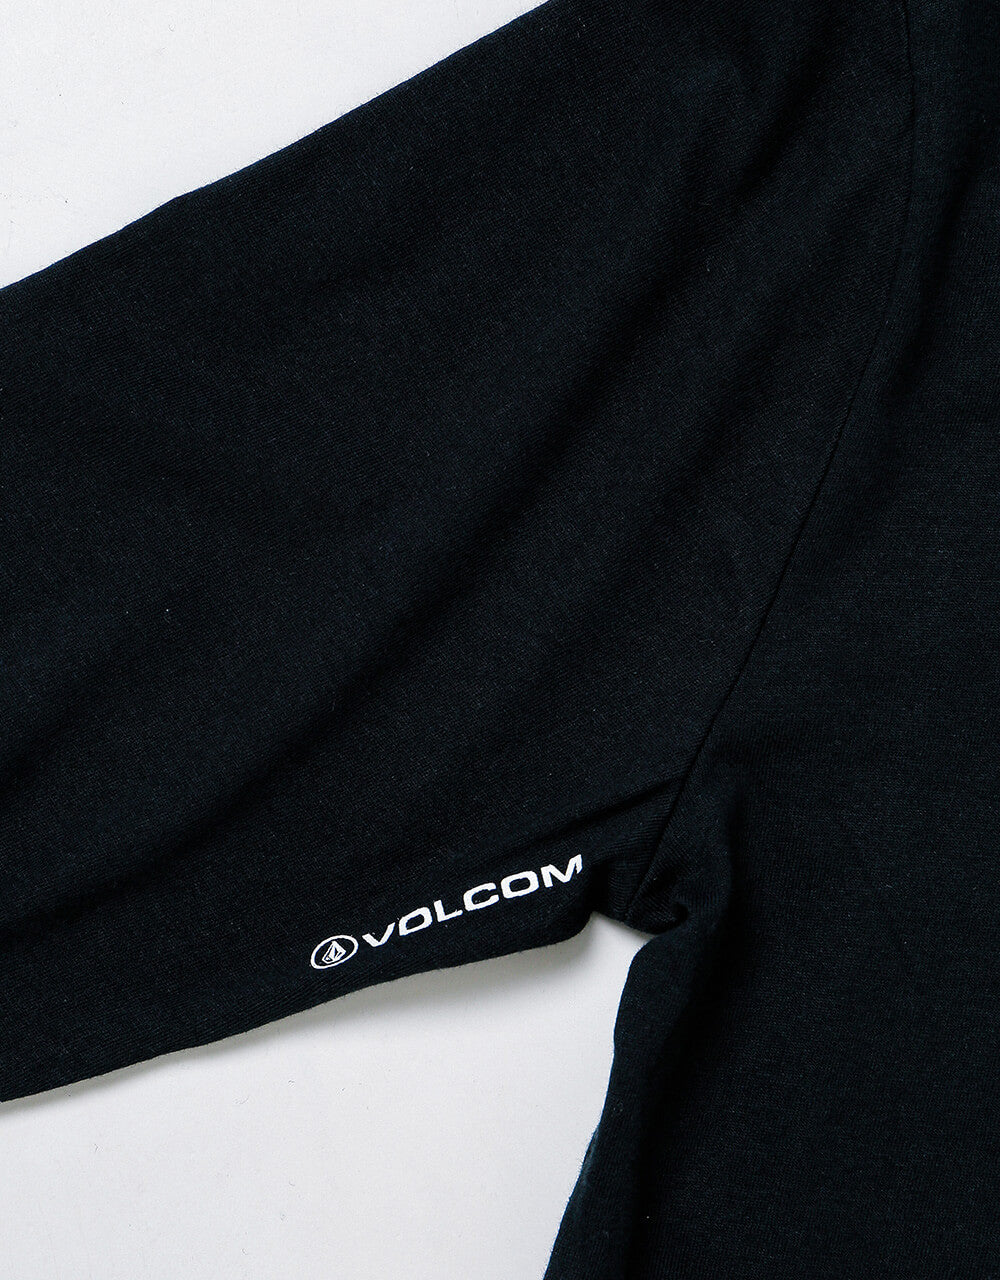 Volcom Descant Long Sleeve Kids T-Shirt - Black